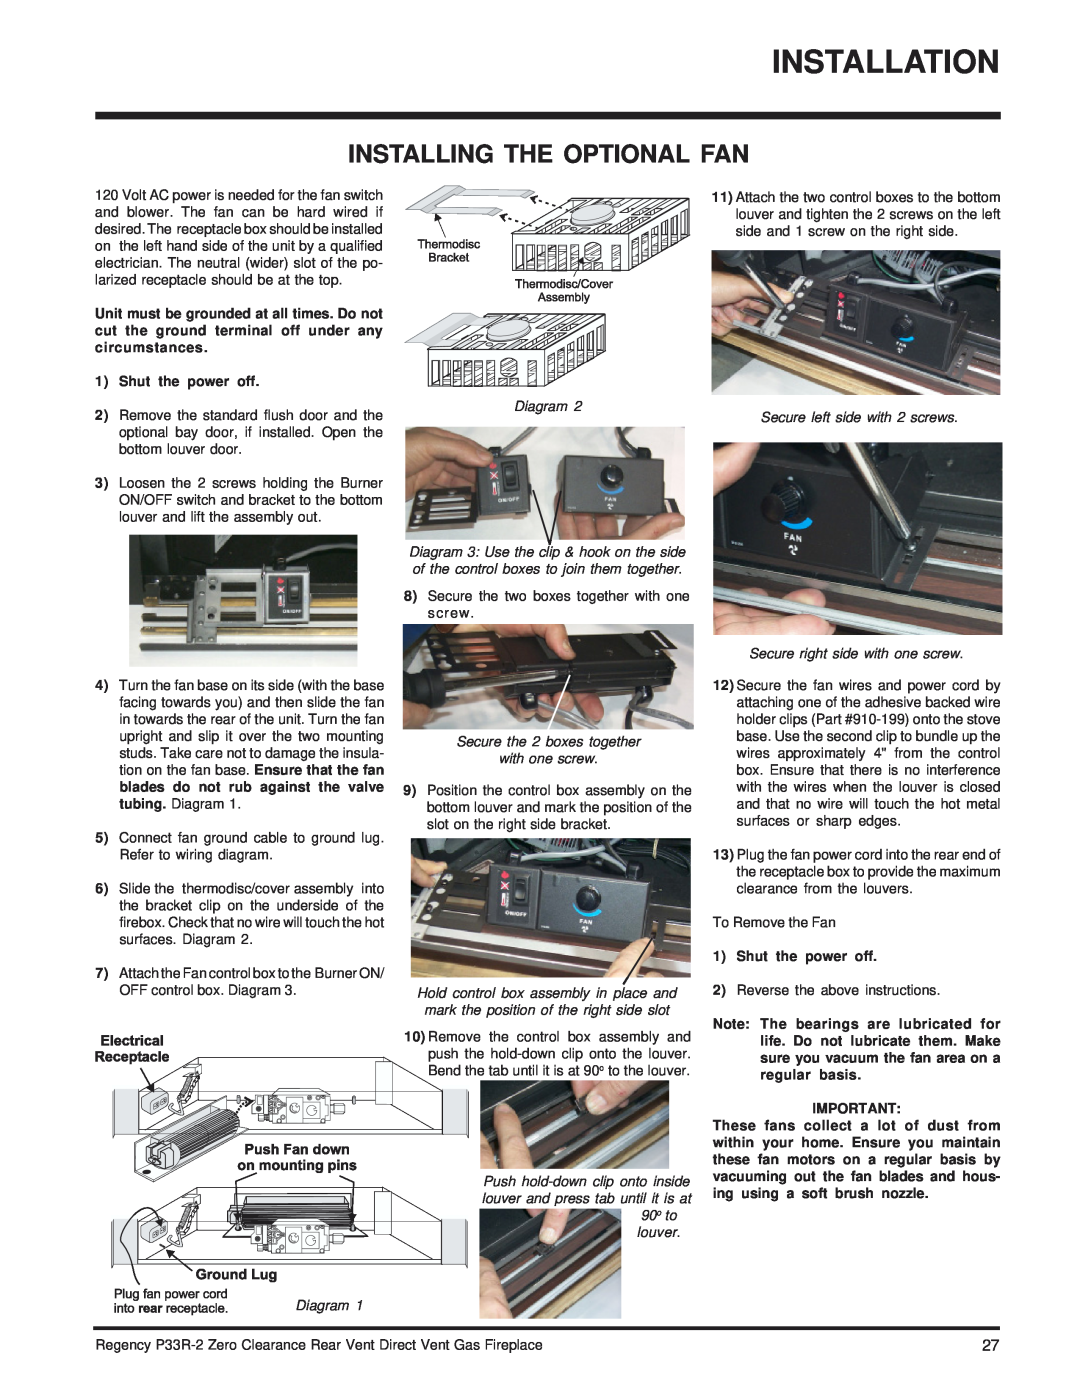 Regency P33R-NG2, P33R-LP2 installation manual Installing The Optional Fan 